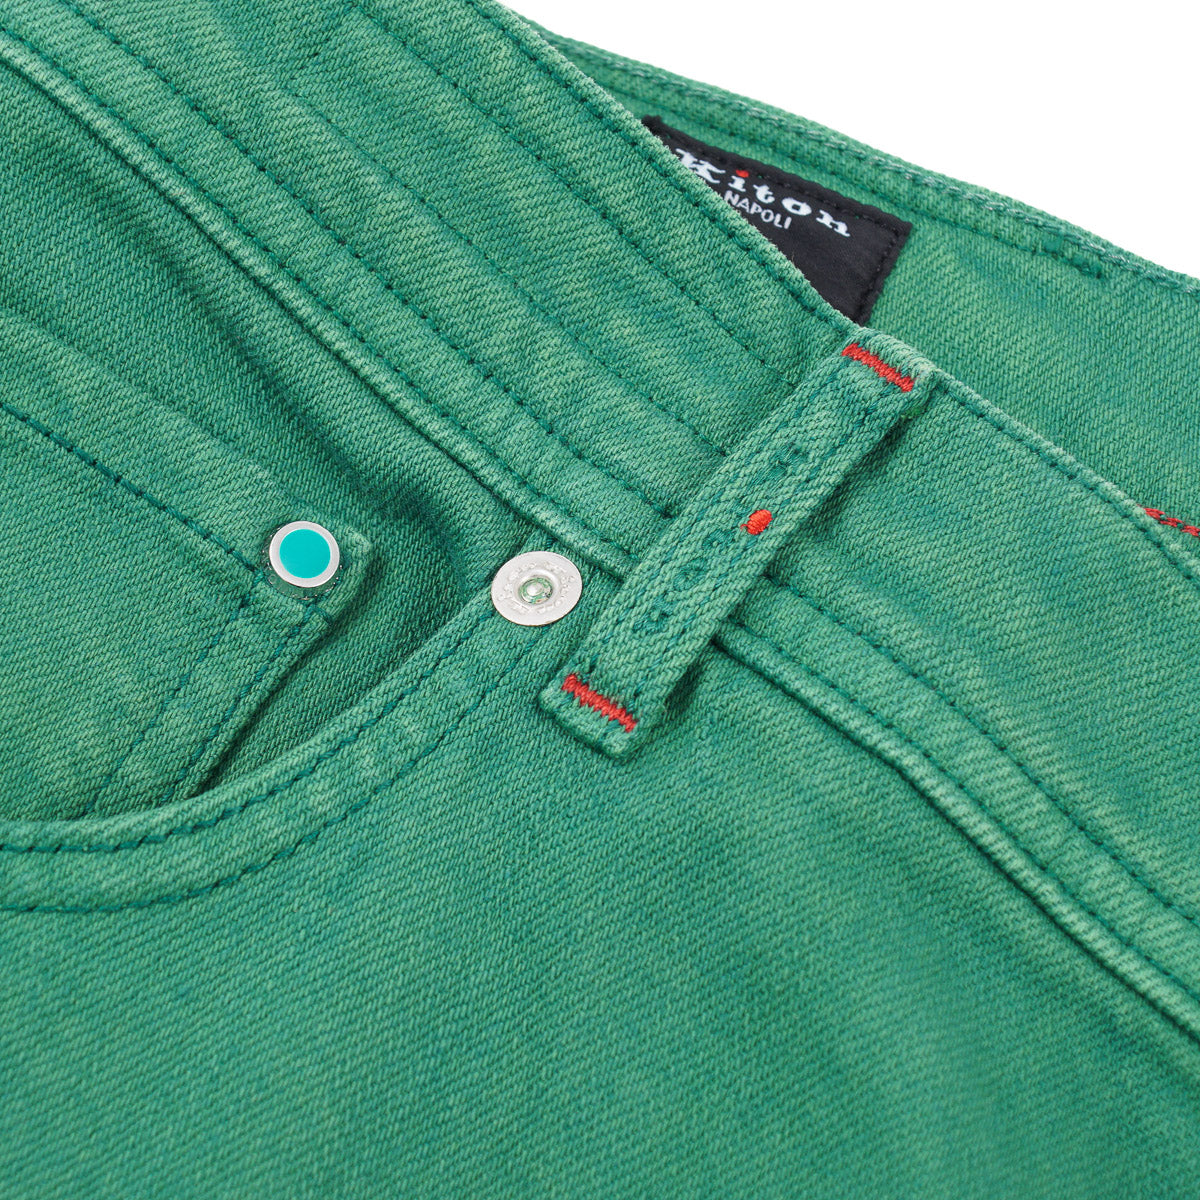 Kiton Green Stretch Denim Jeans - Top Shelf Apparel